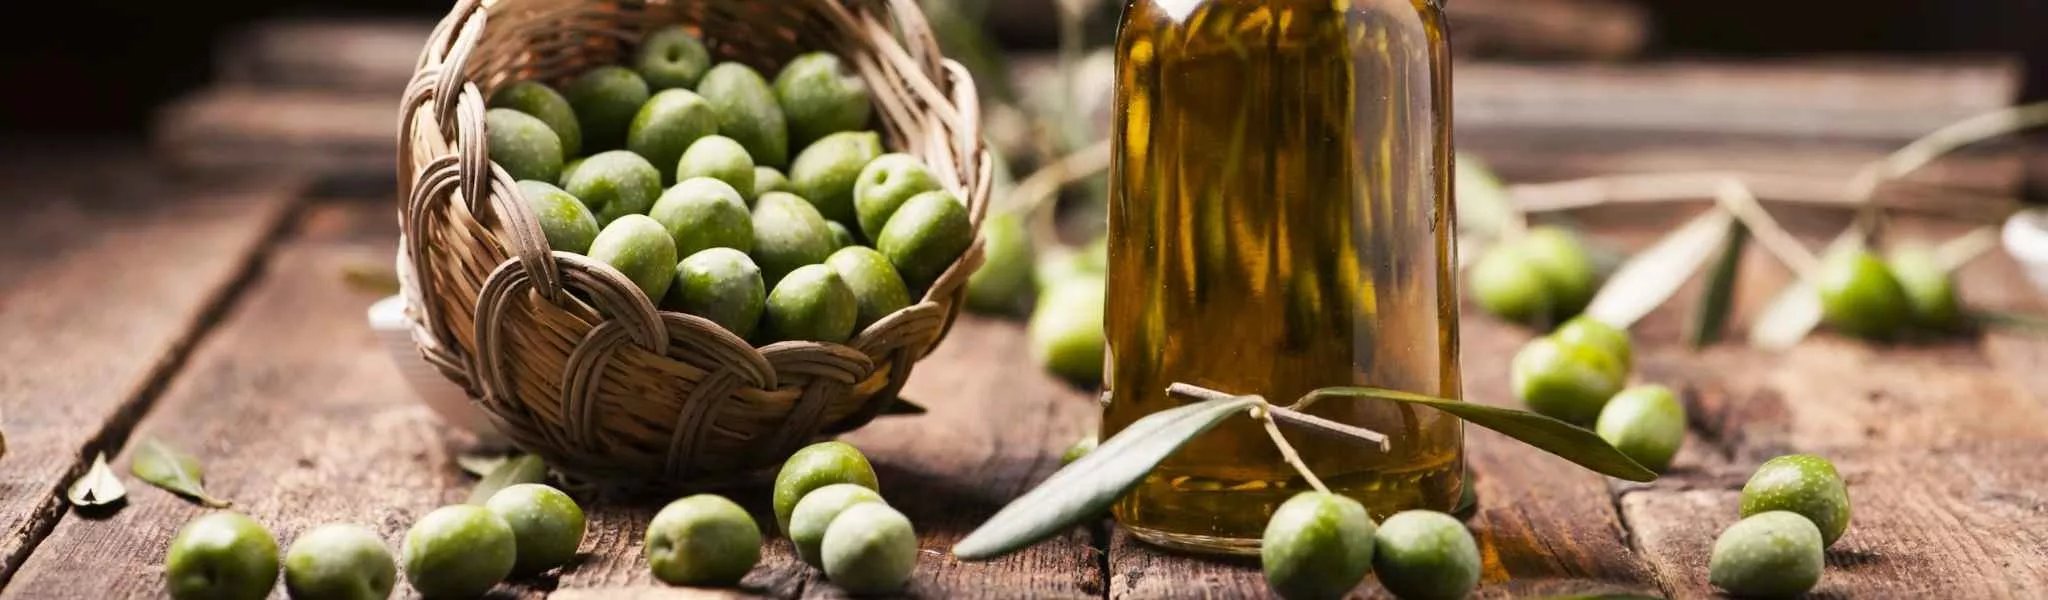 Huile d'olive bio 